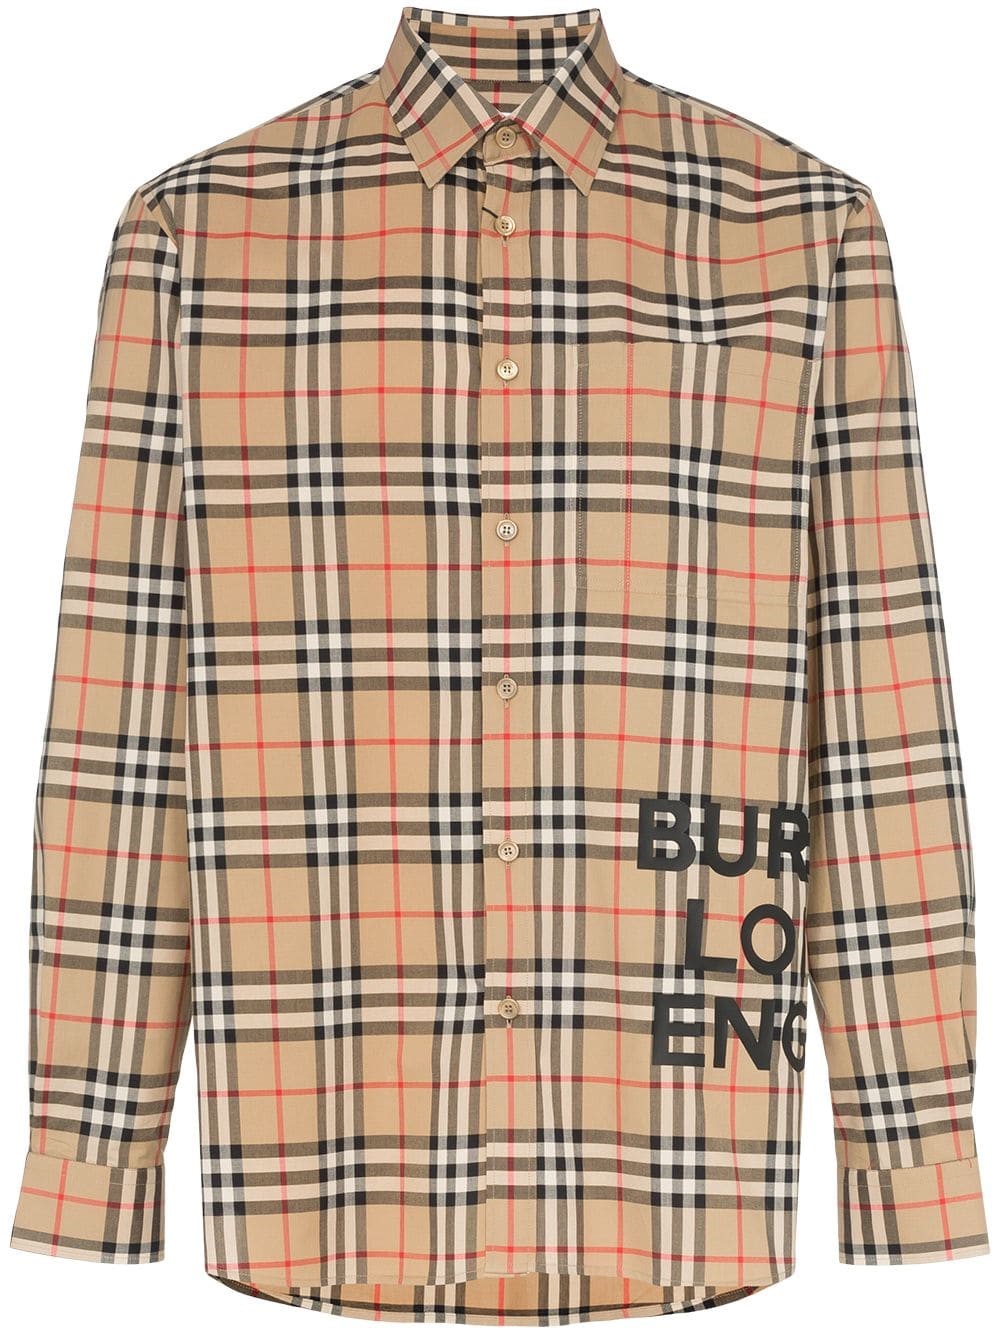 burberry check shirt